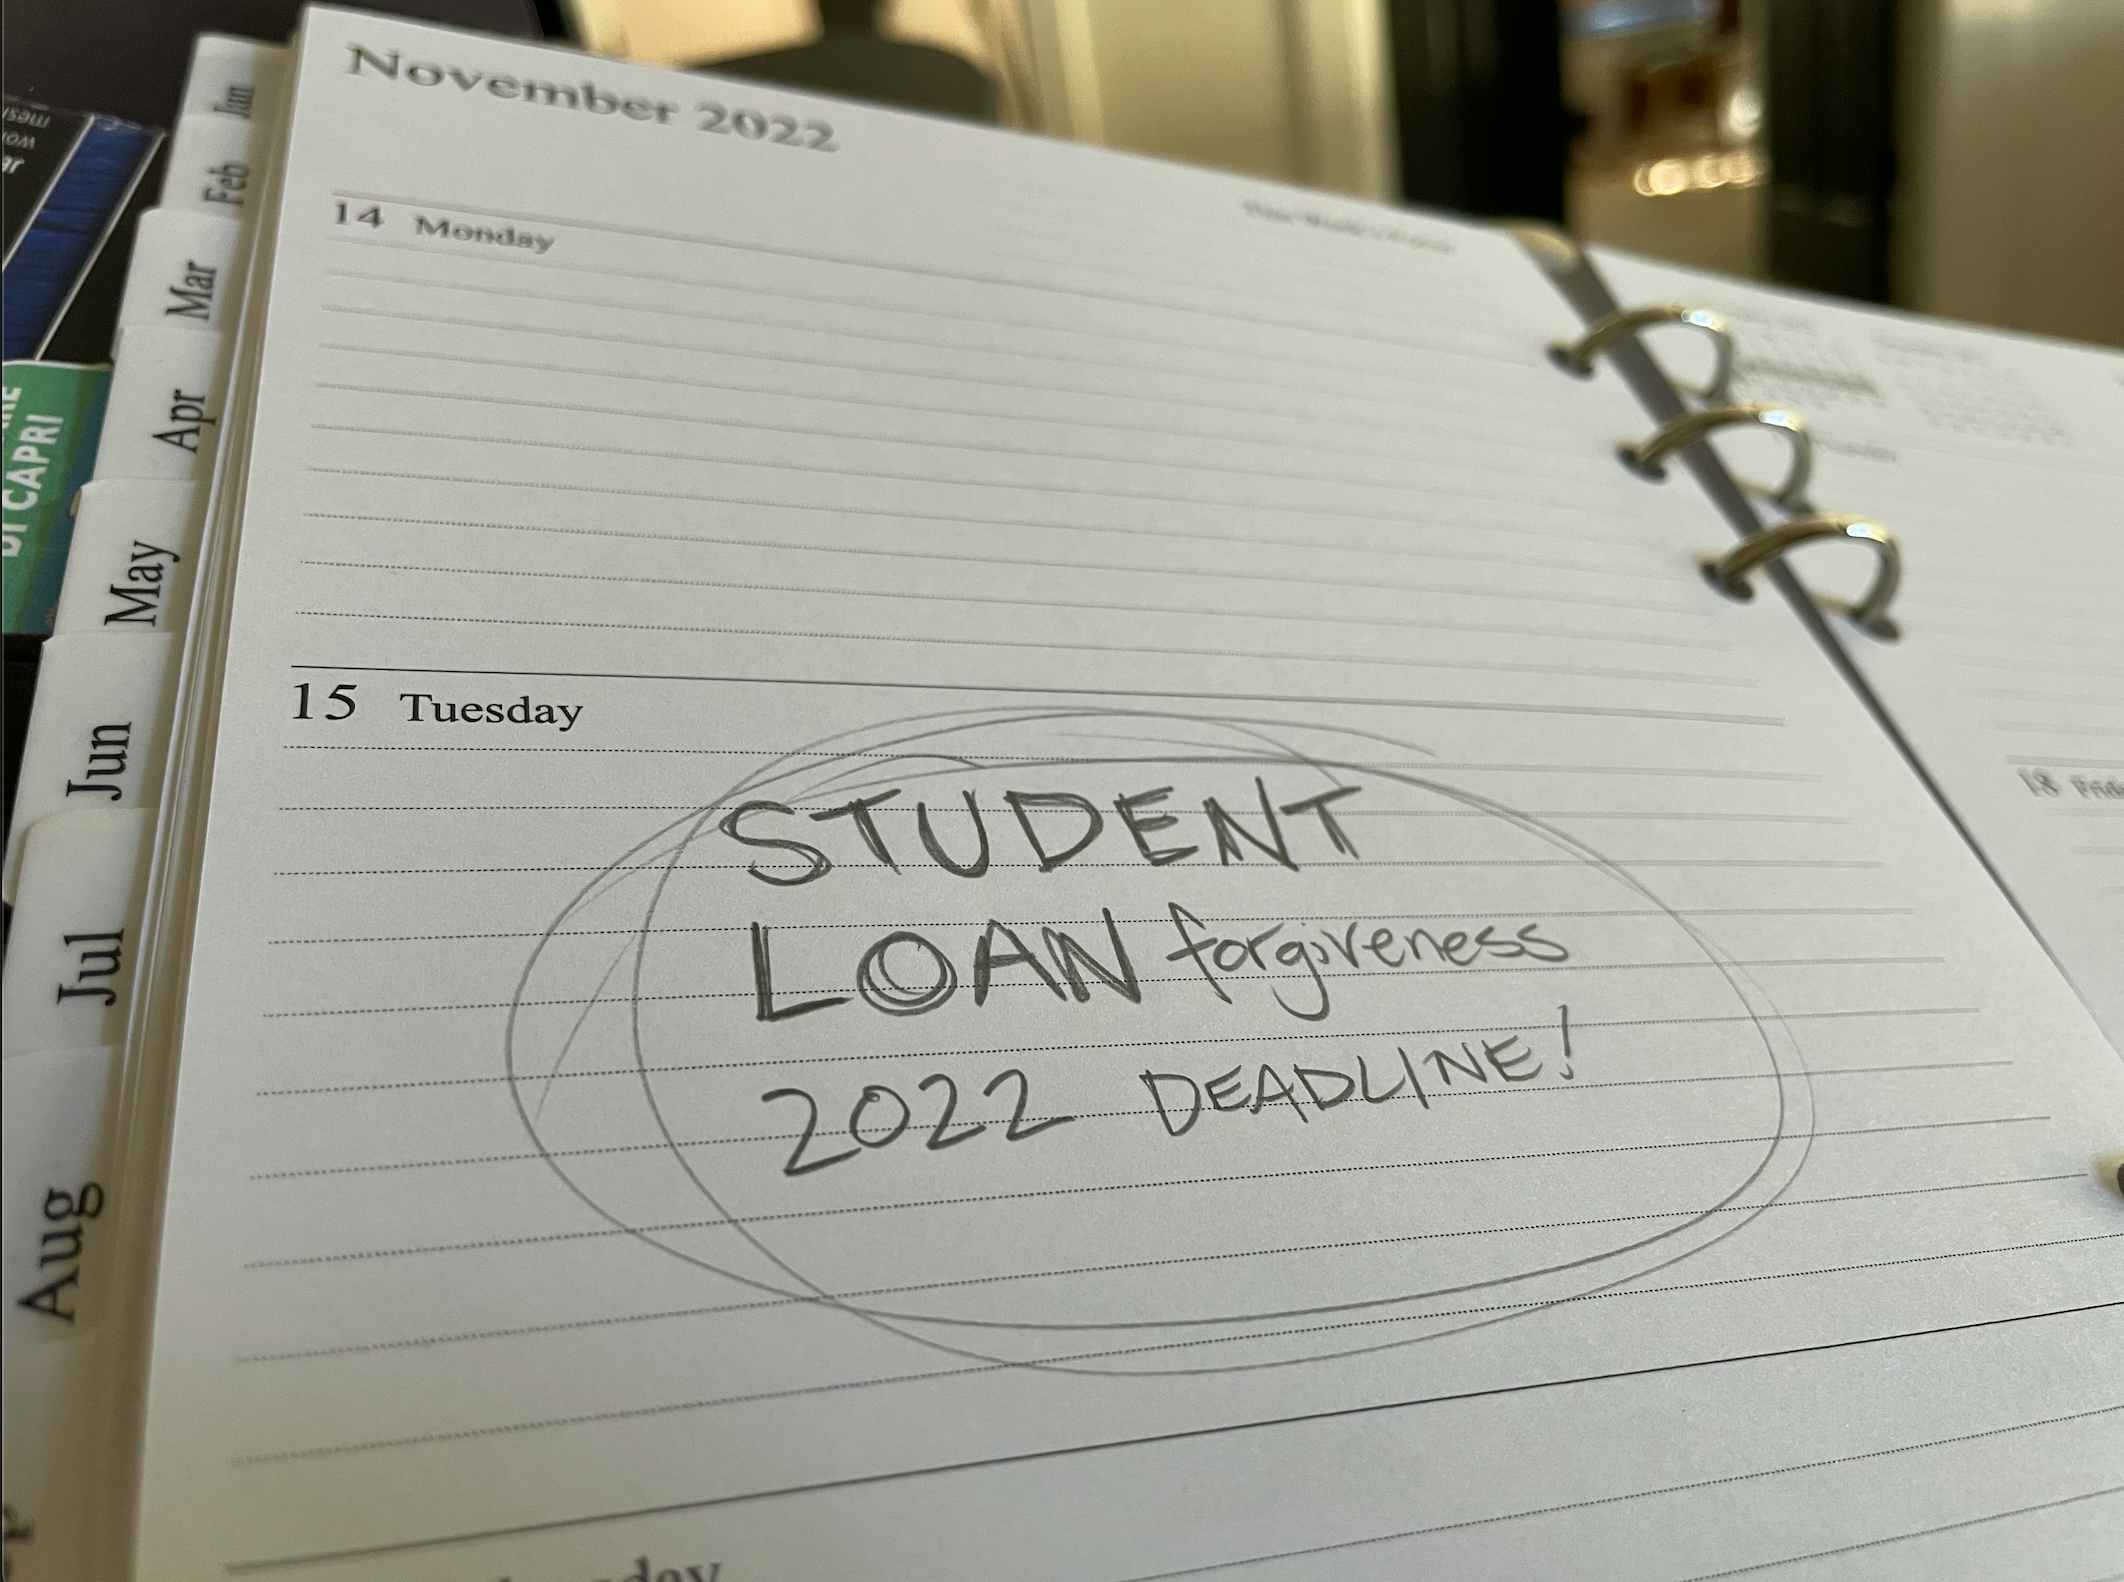 planner with Nov. 15, 2022 deadline for student loan forgiveness